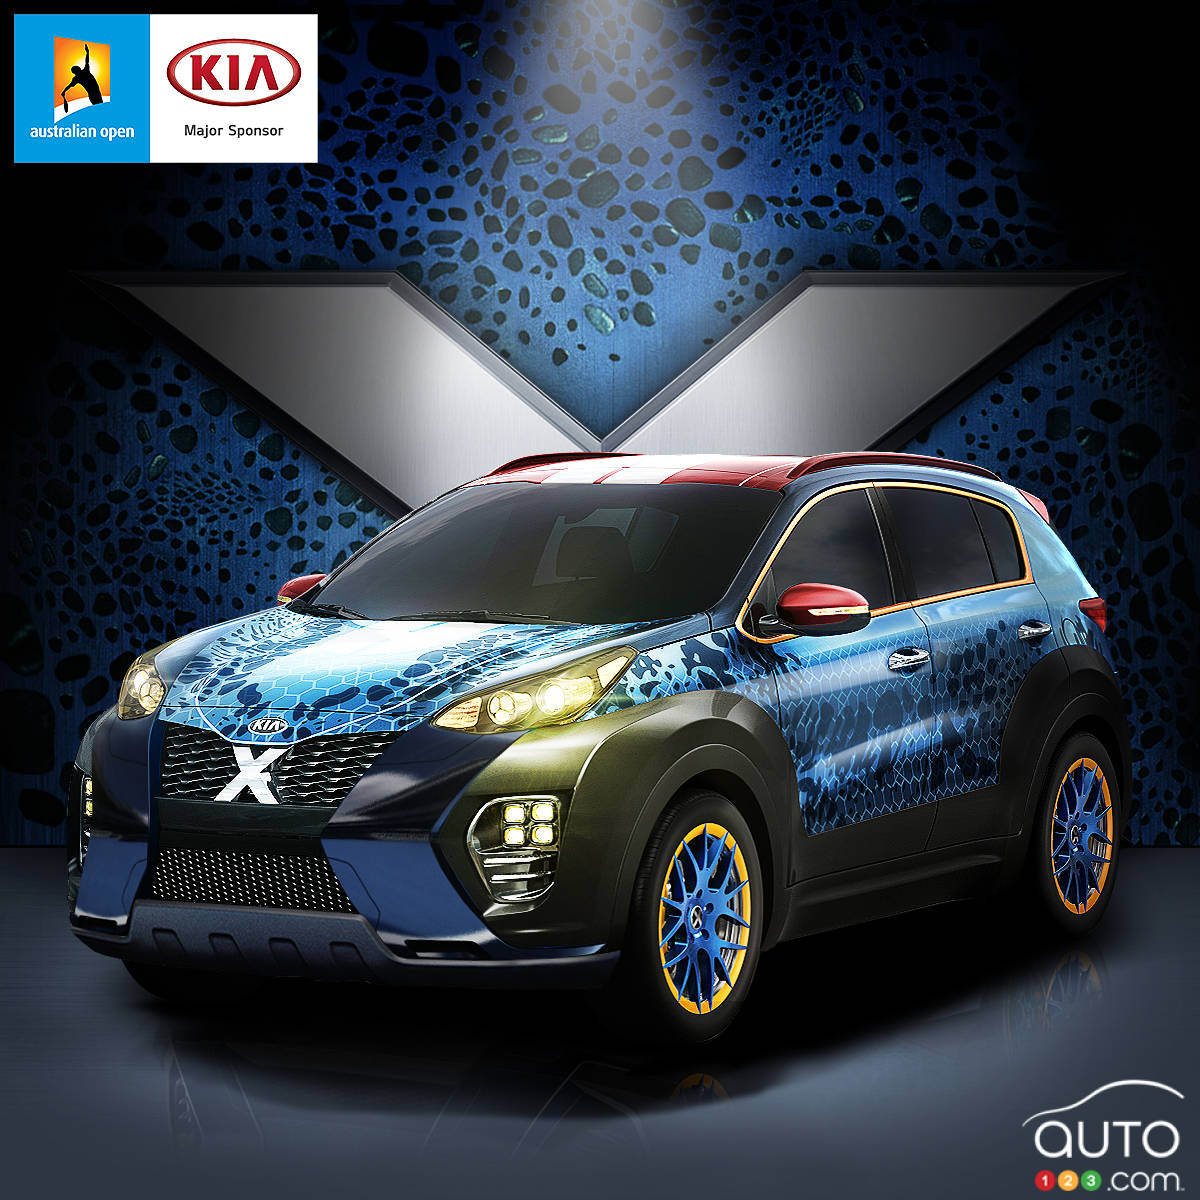 Kia Sportage special edition inspired by new “X-Men: Apocalypse” movie